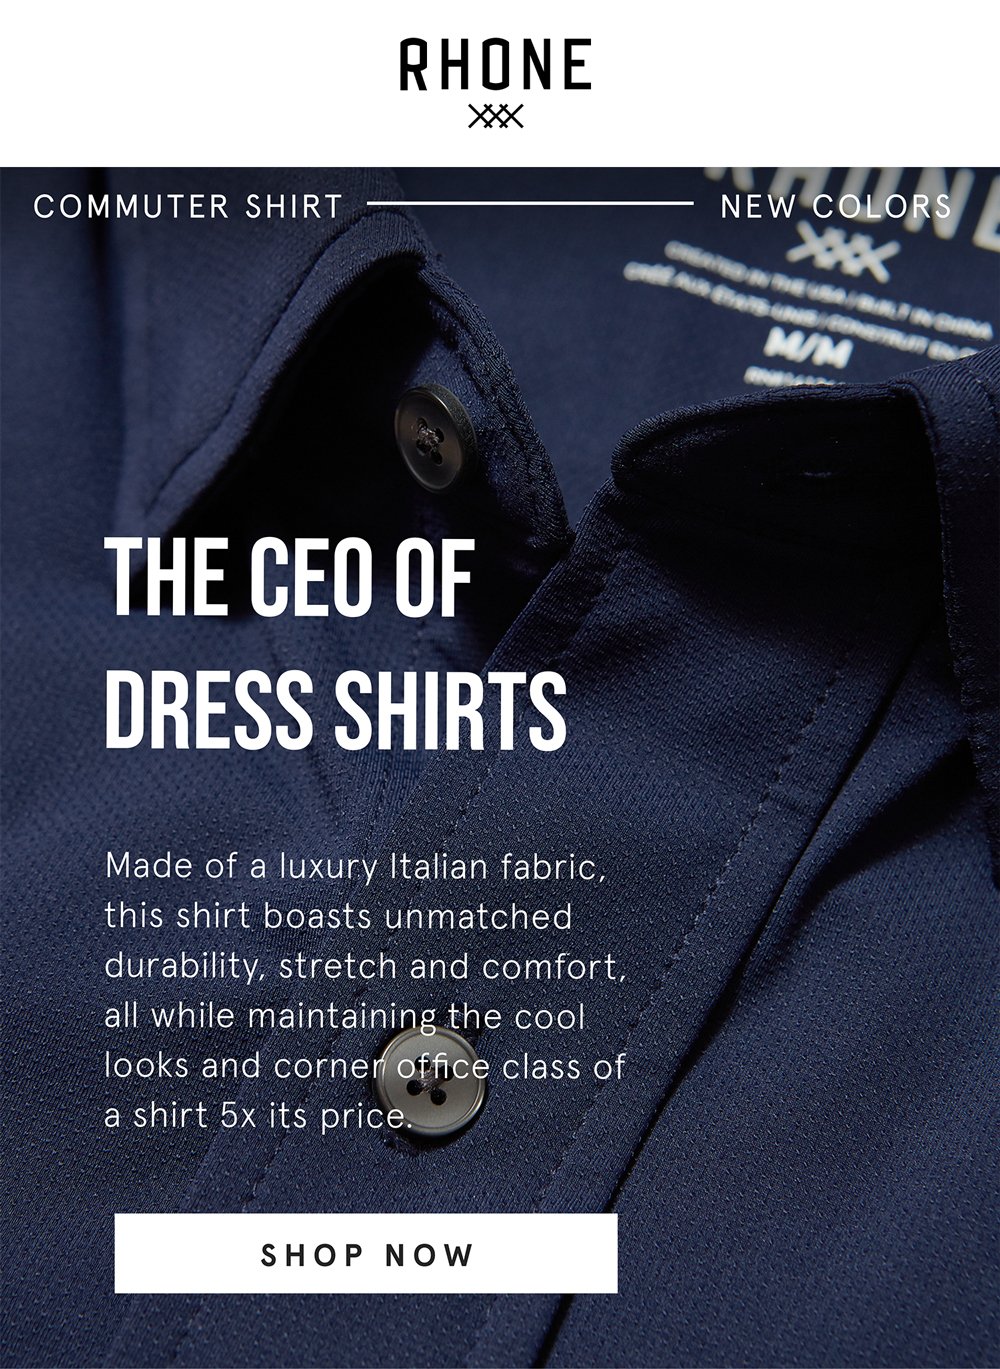 Rhone: The Most Comfortable Dress Shirt ...